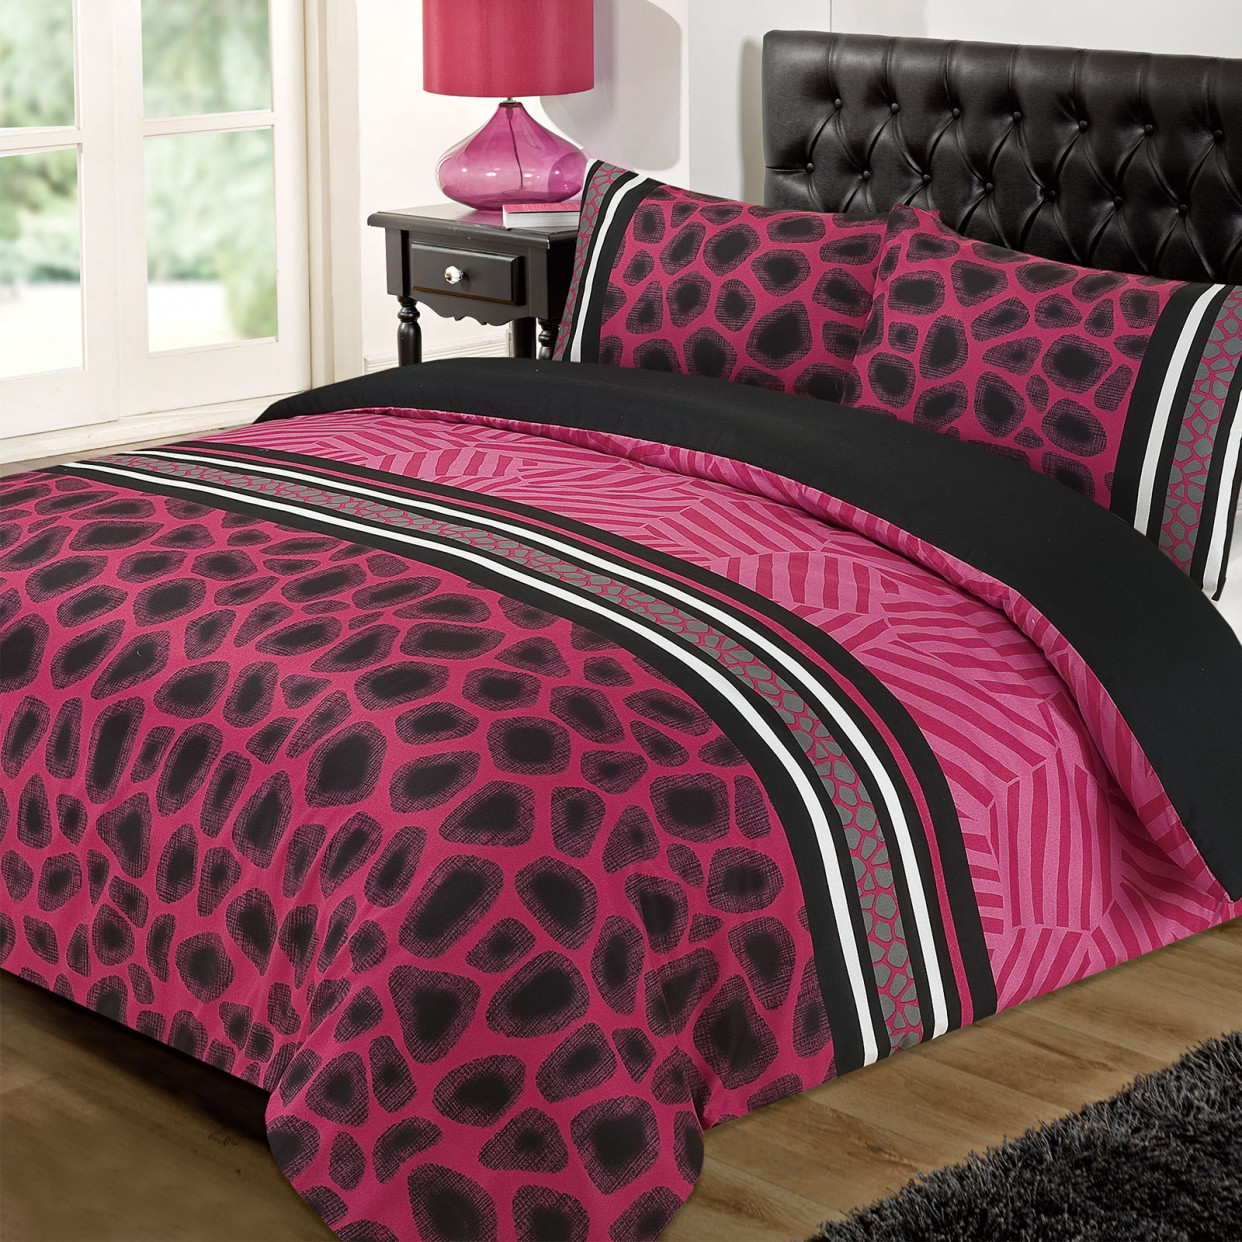 Animal Print Duvet King Size Cover with Pillowcase Set - Pink/Black >